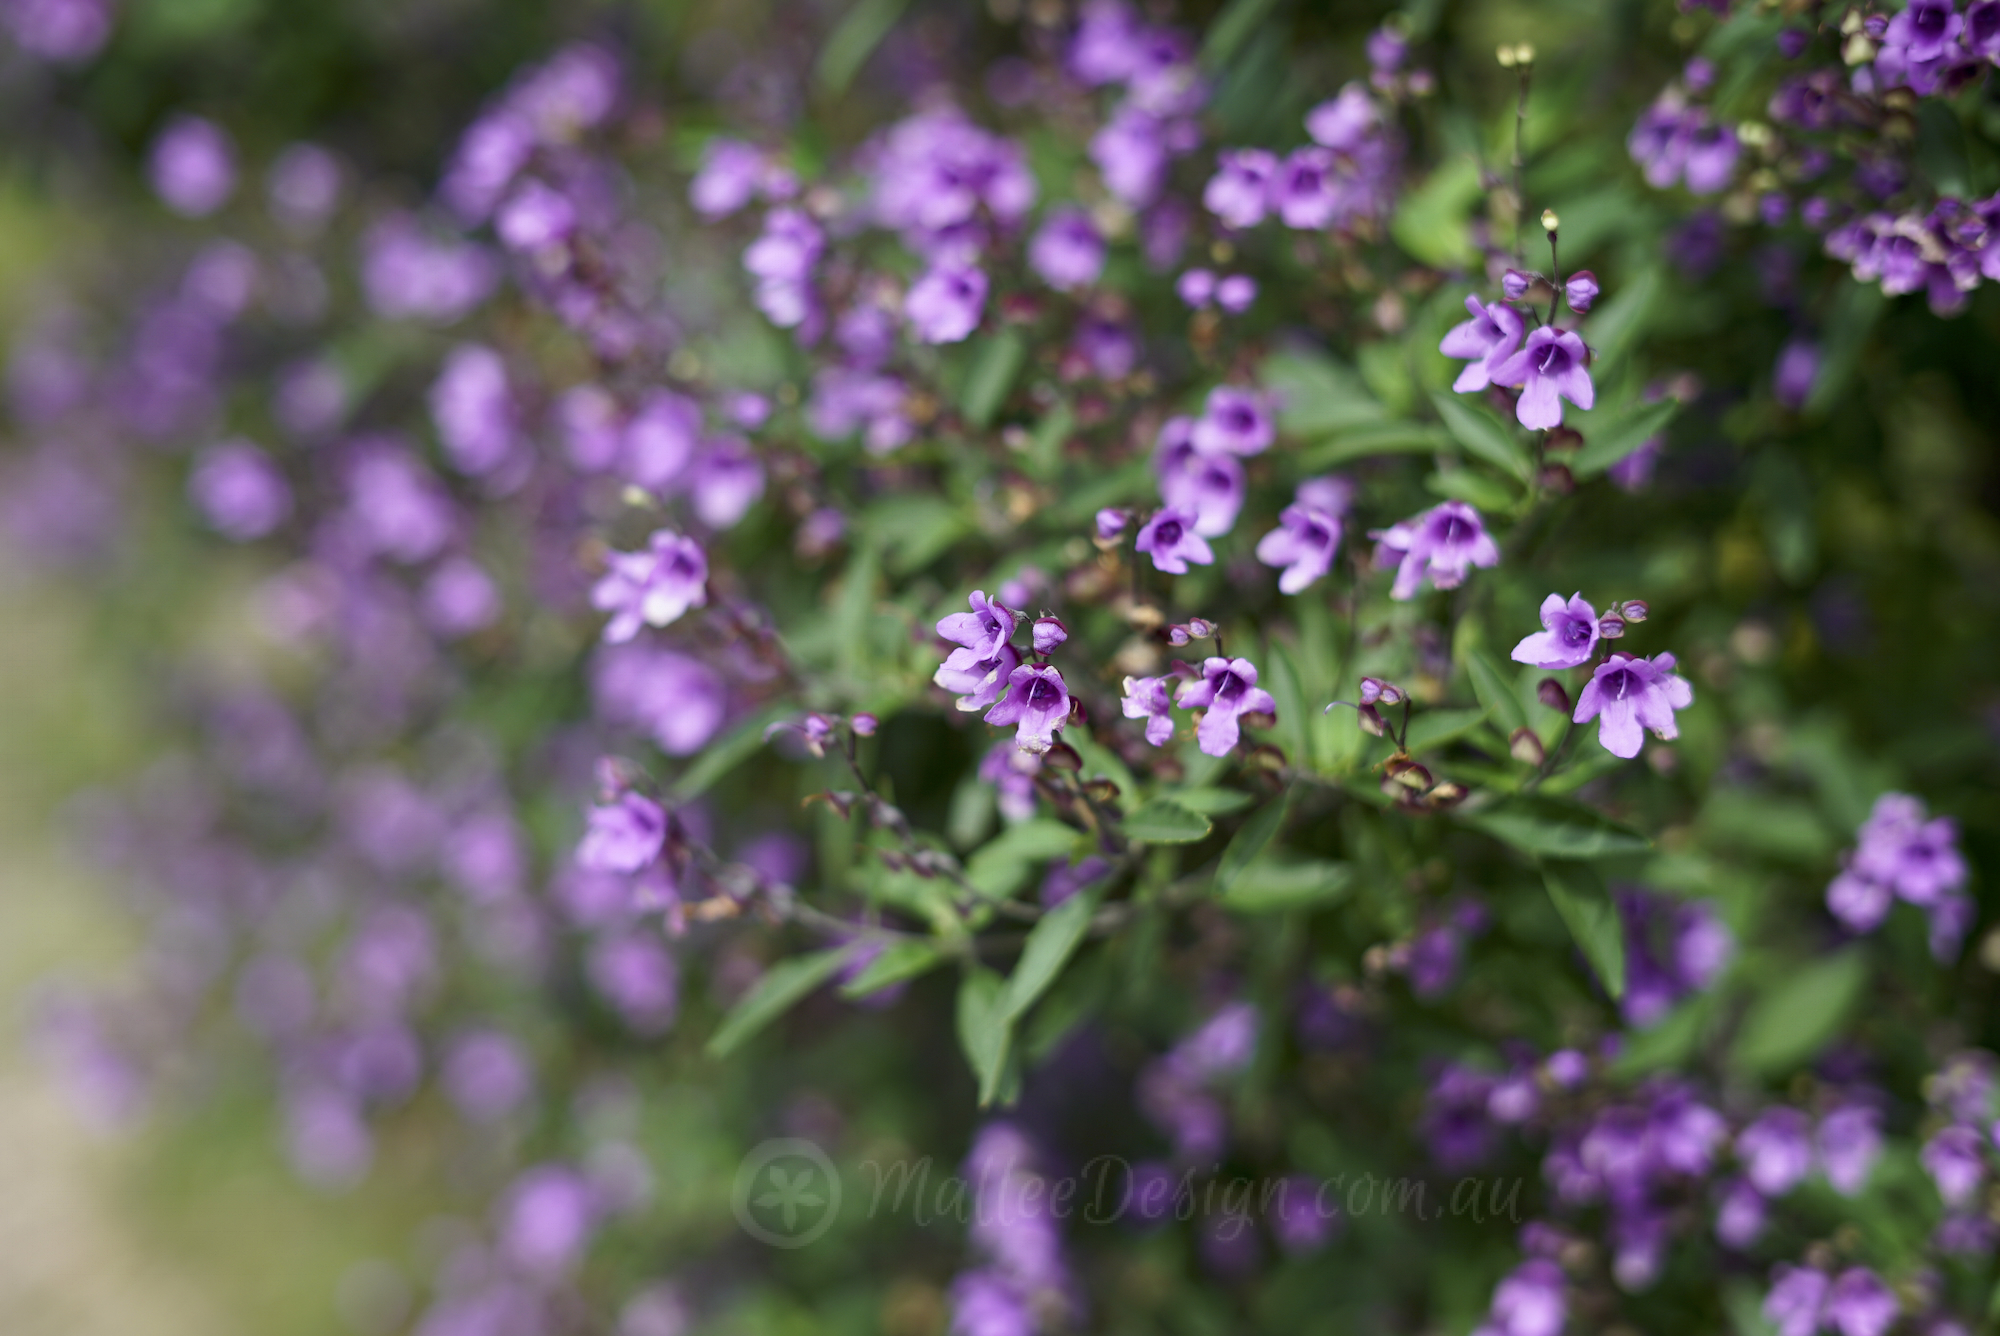 The purple punch of Prostanthera ovalifolia